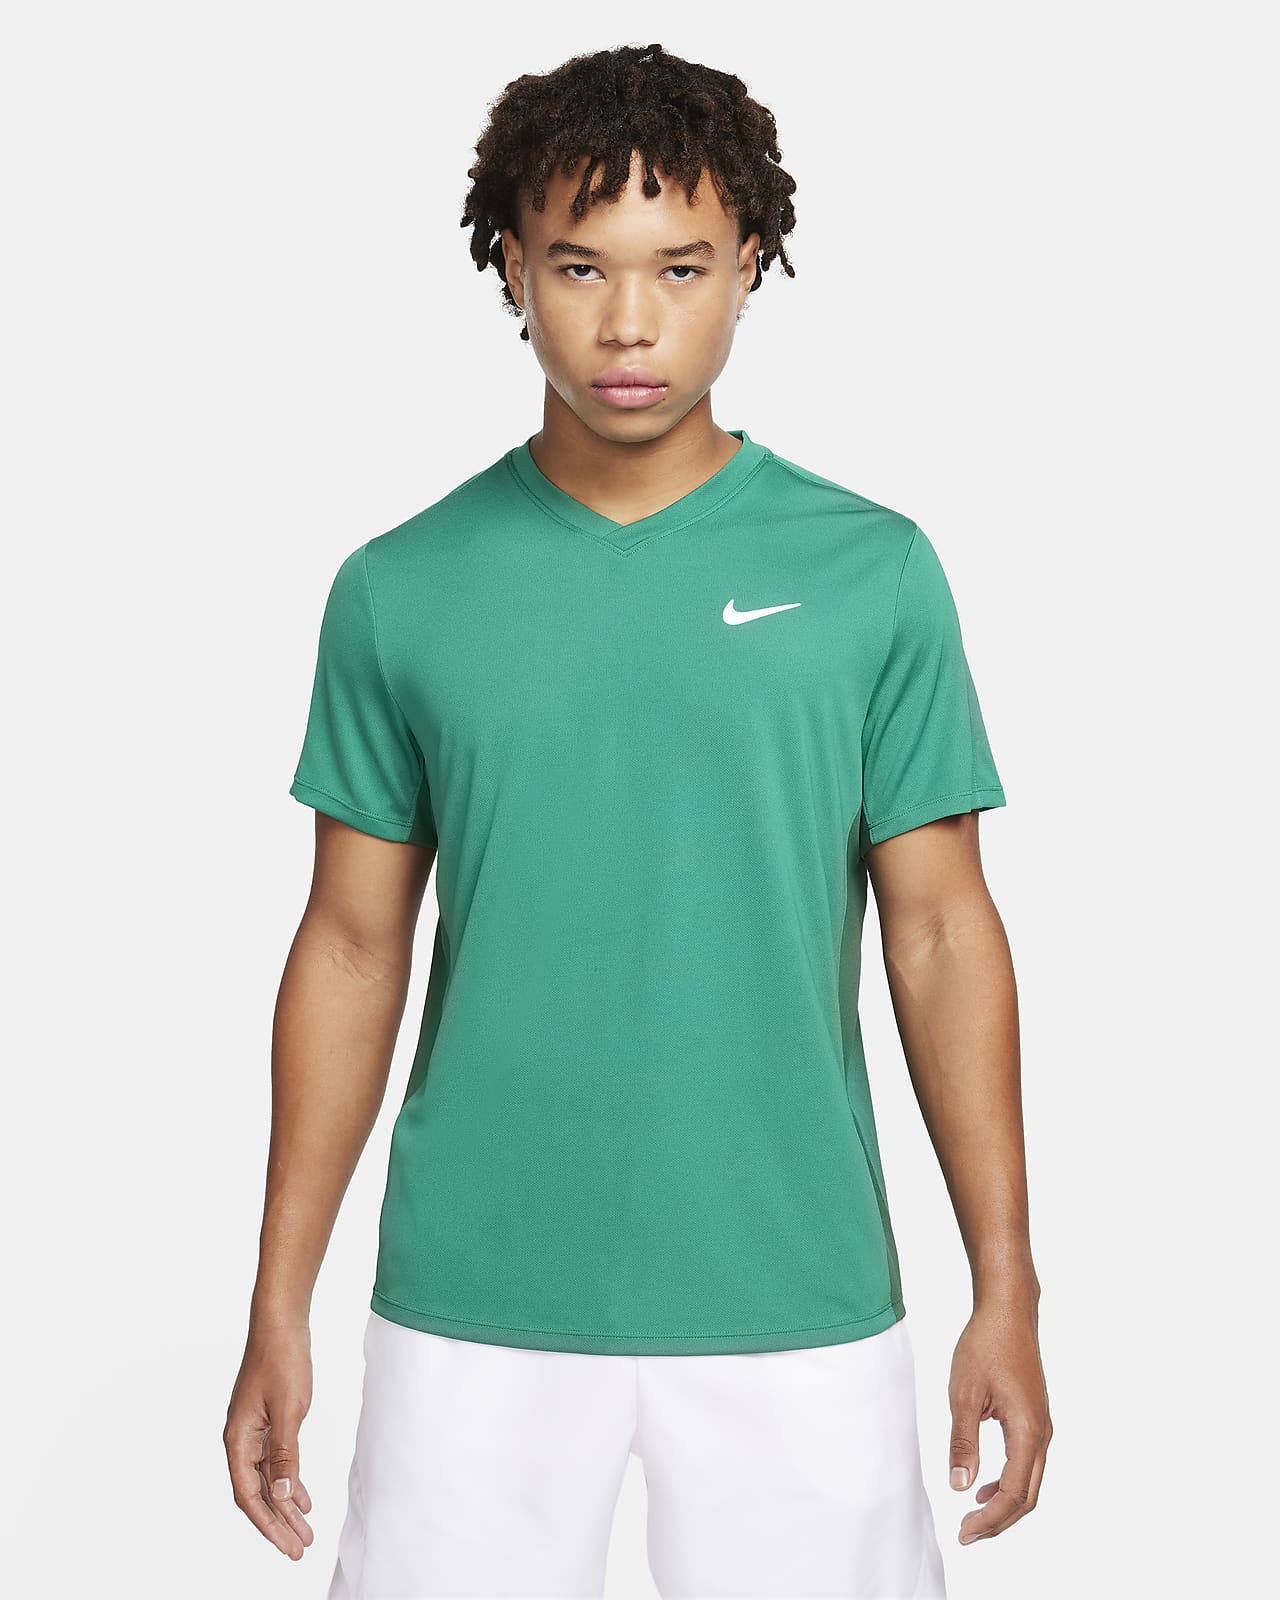 Men's Nike NikeCourt Blue T-Shirt